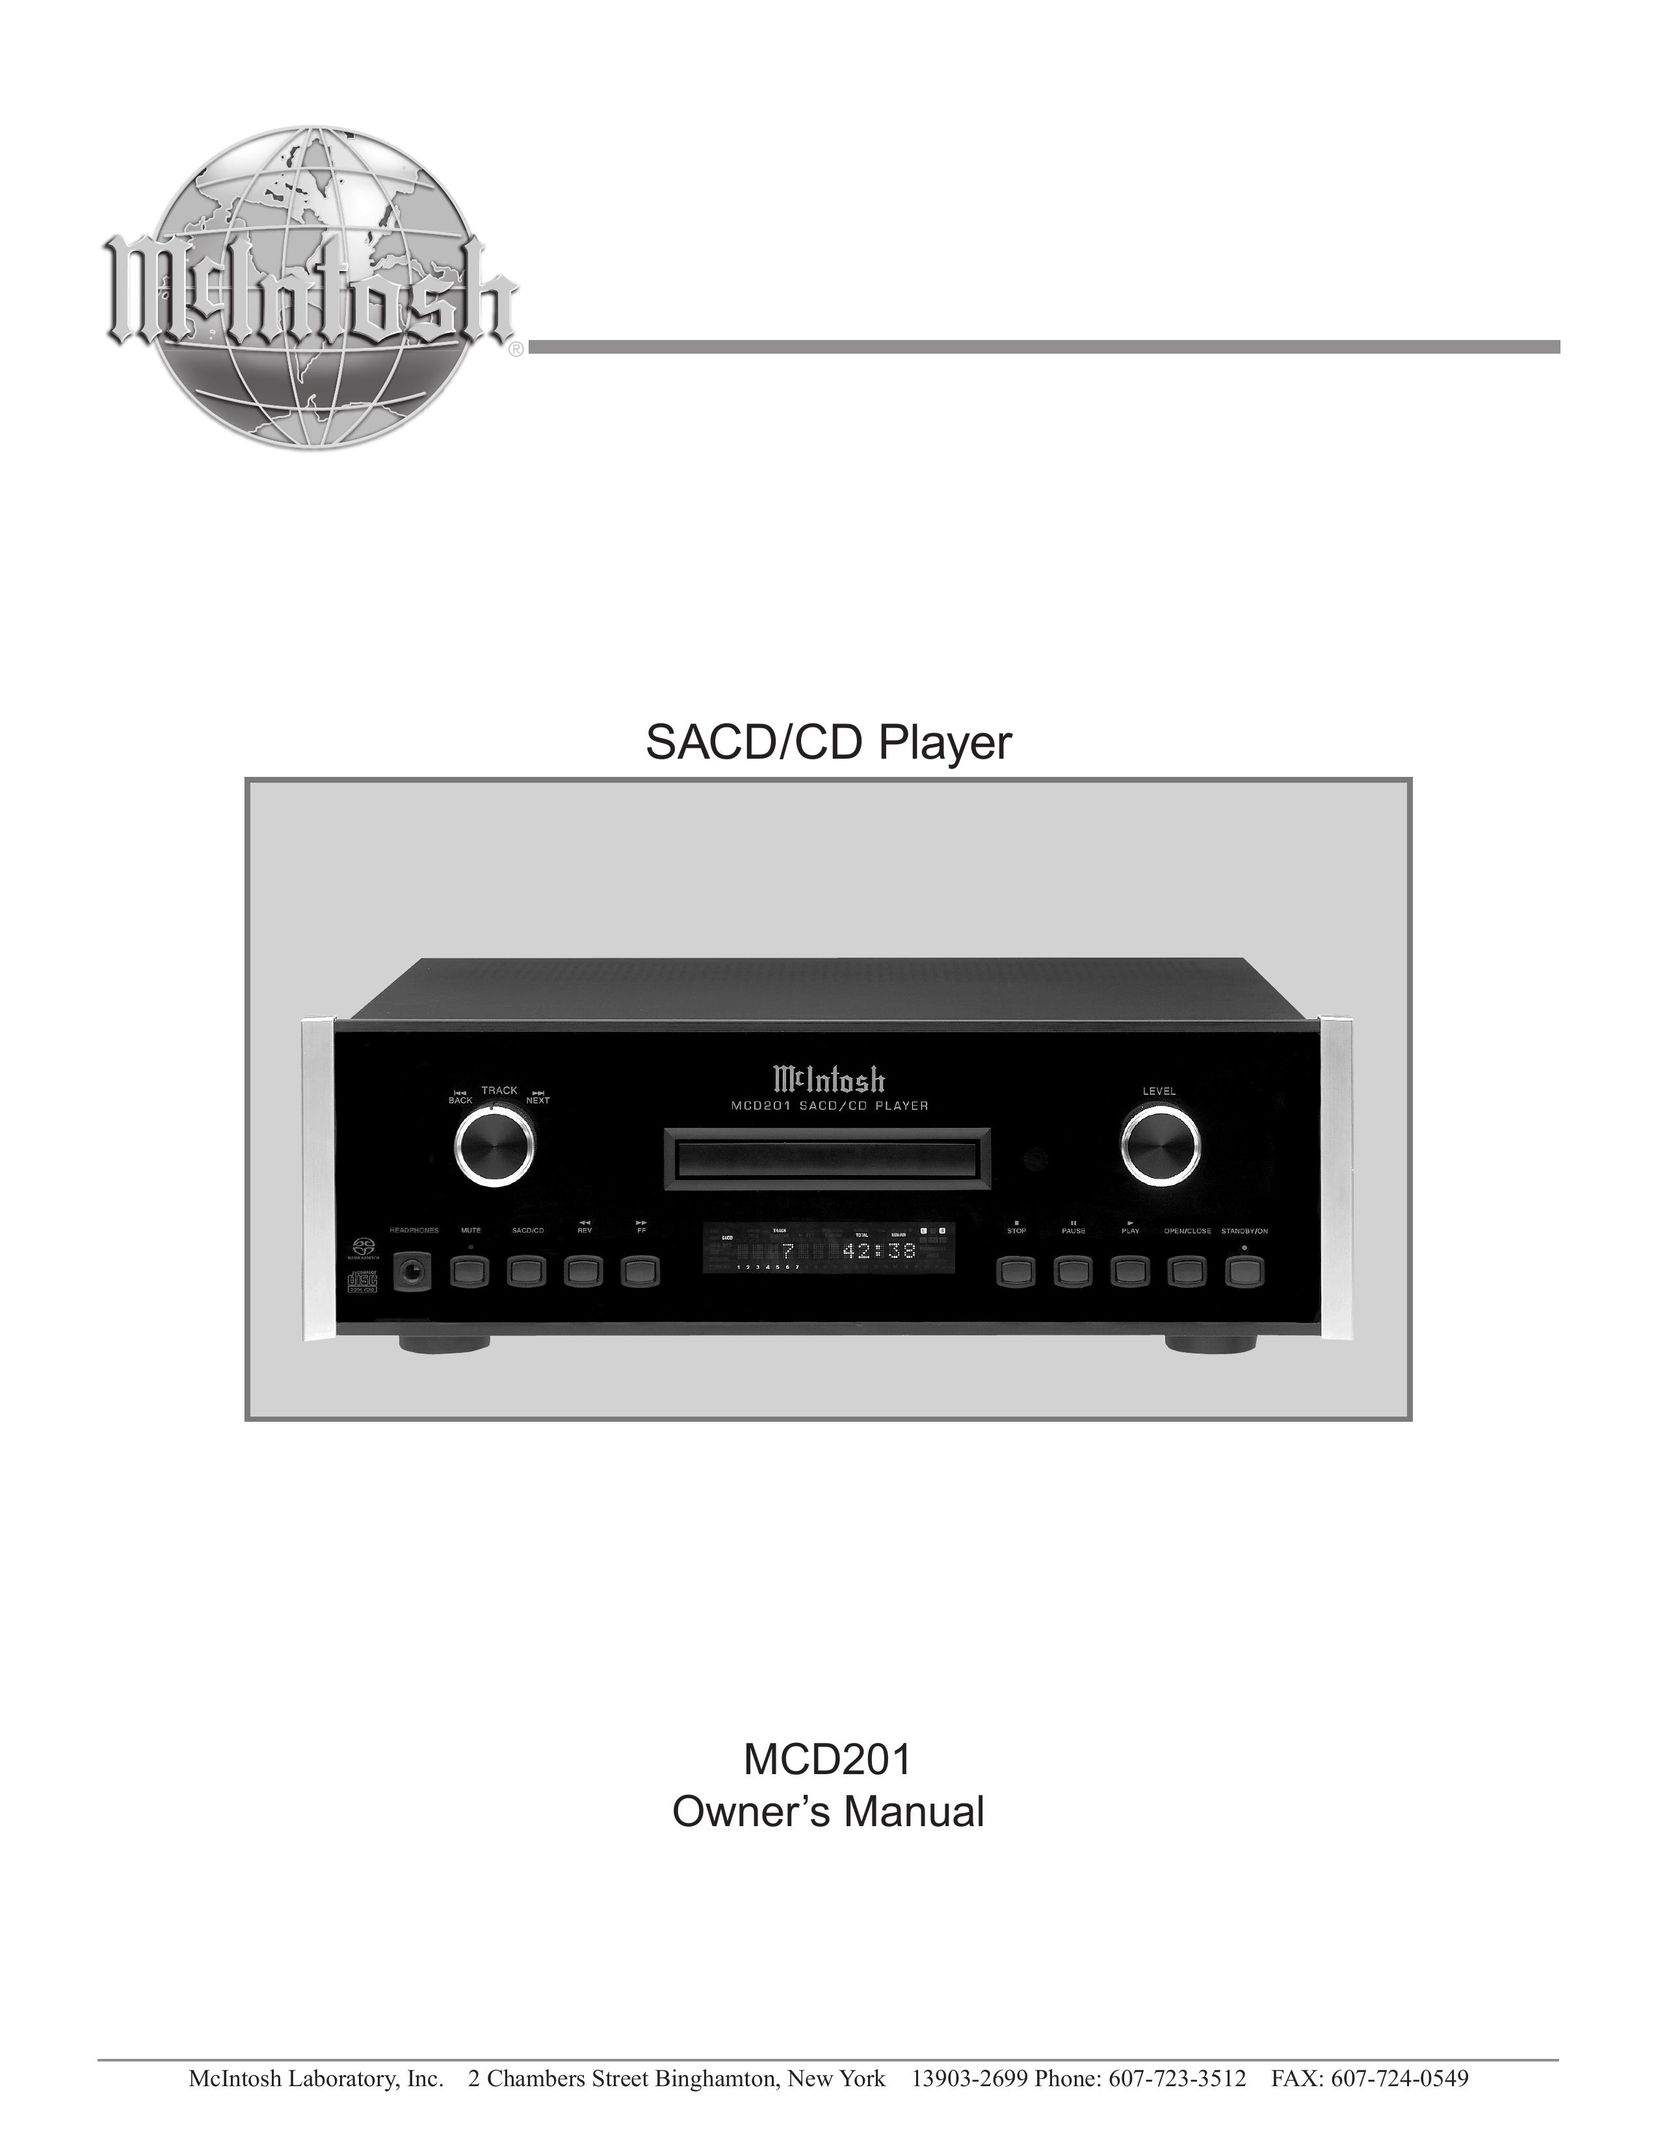 McIntosh MCD201 CD Player User Manual